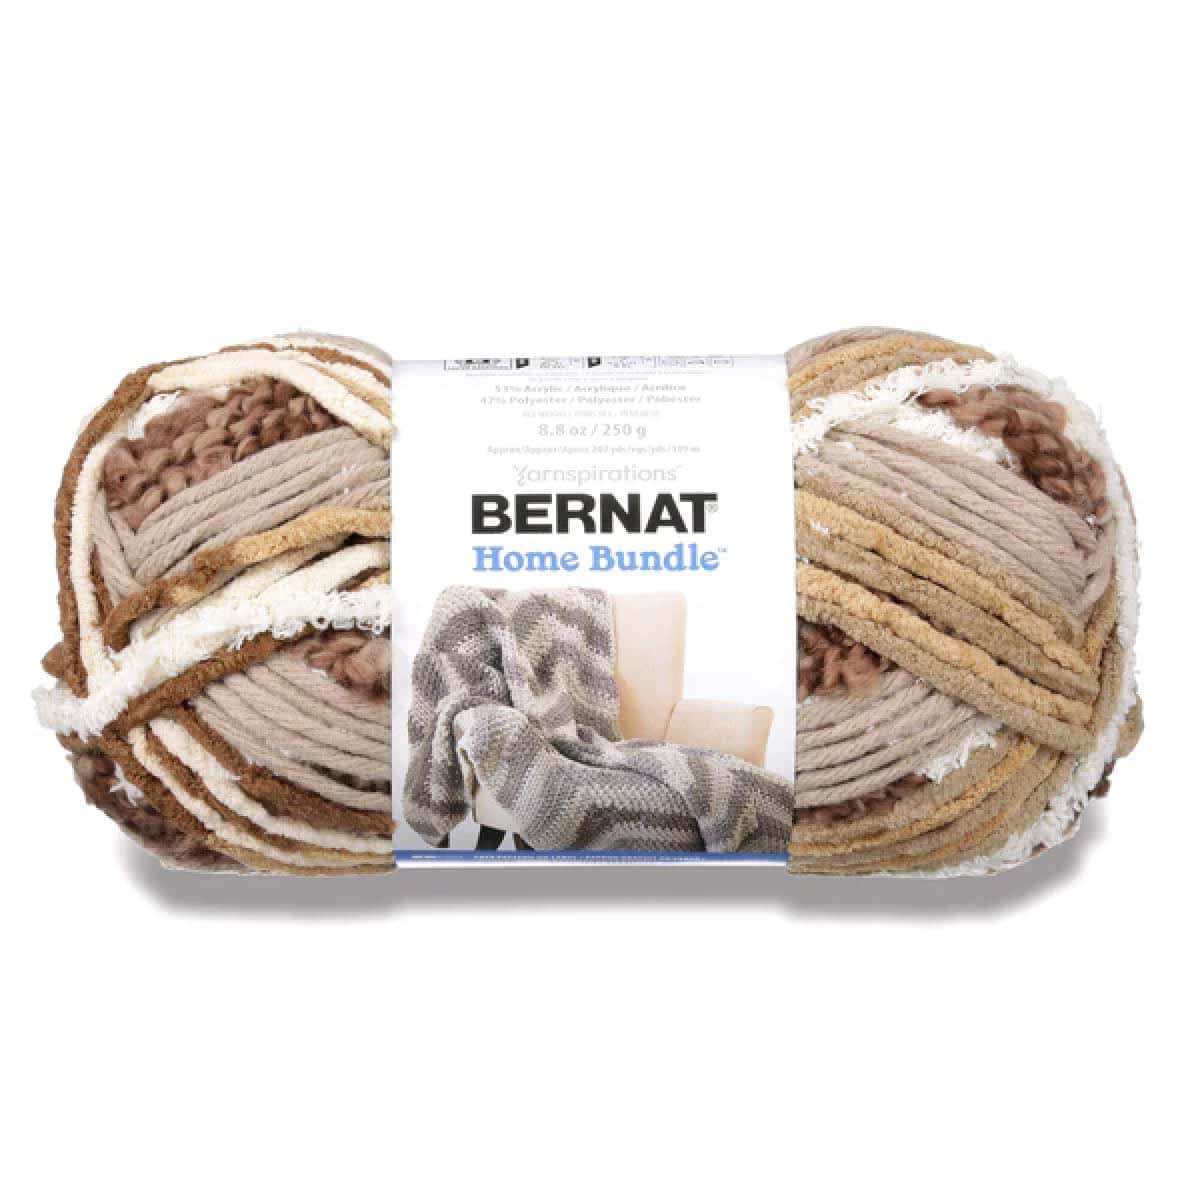 Bernat Home Bundle Yarn Product